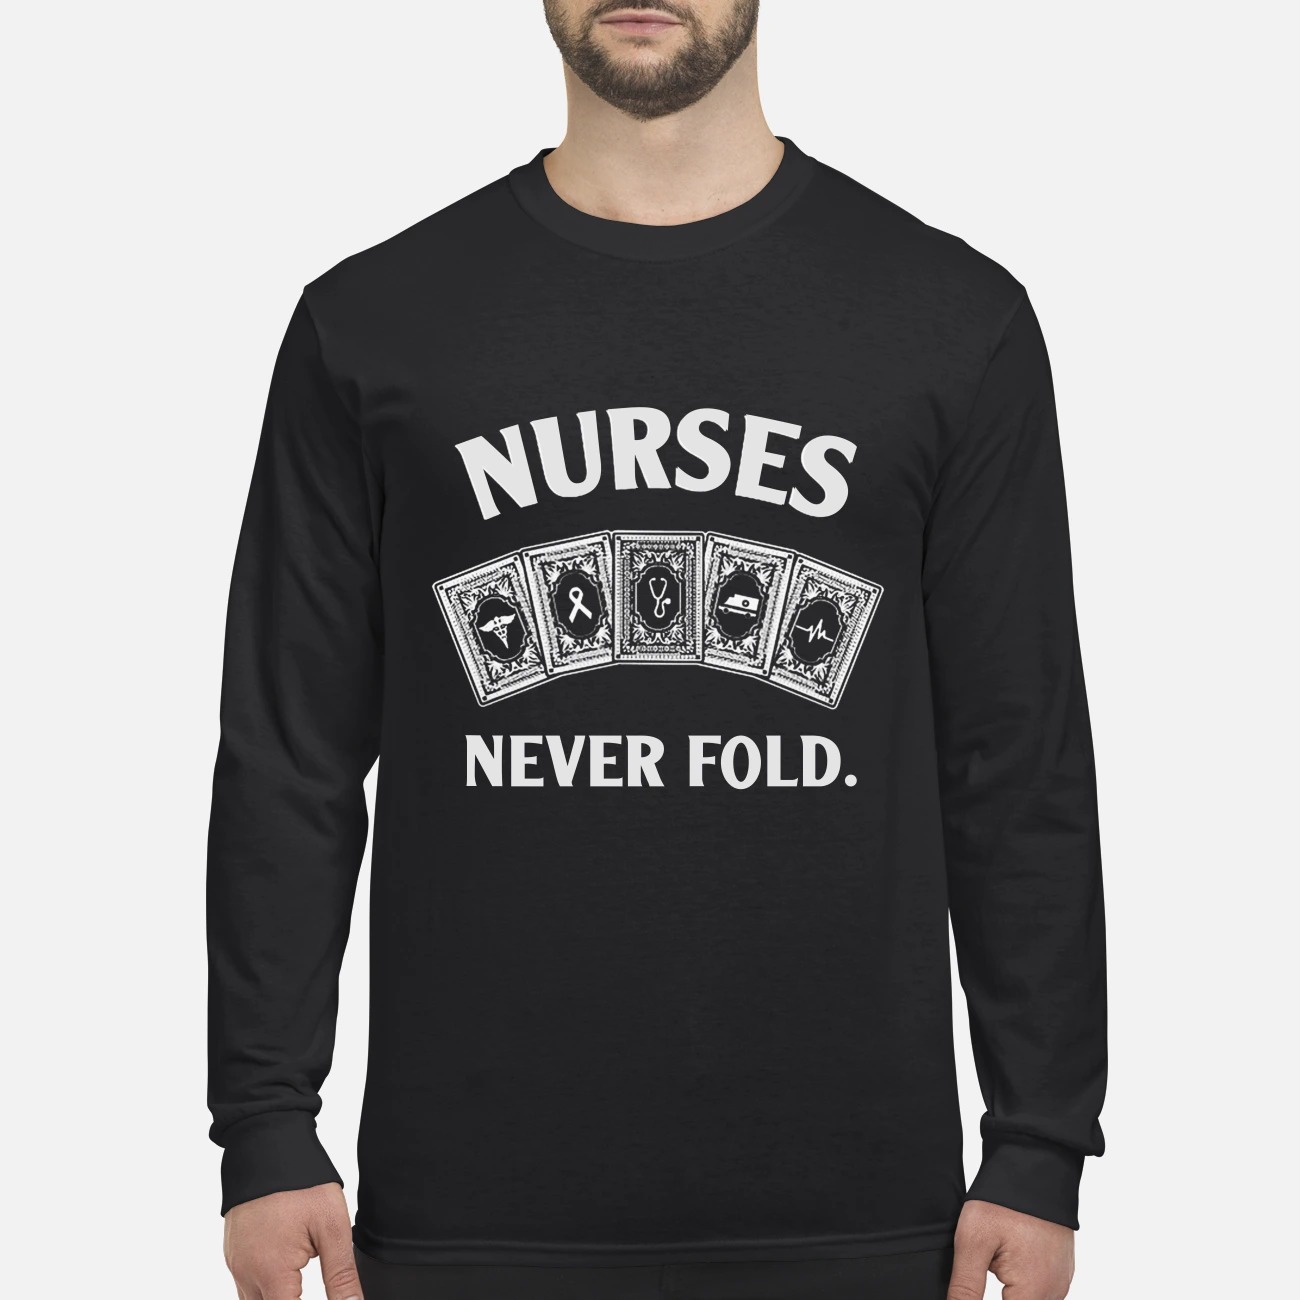 Nurses never fold men's long sleeved shirt